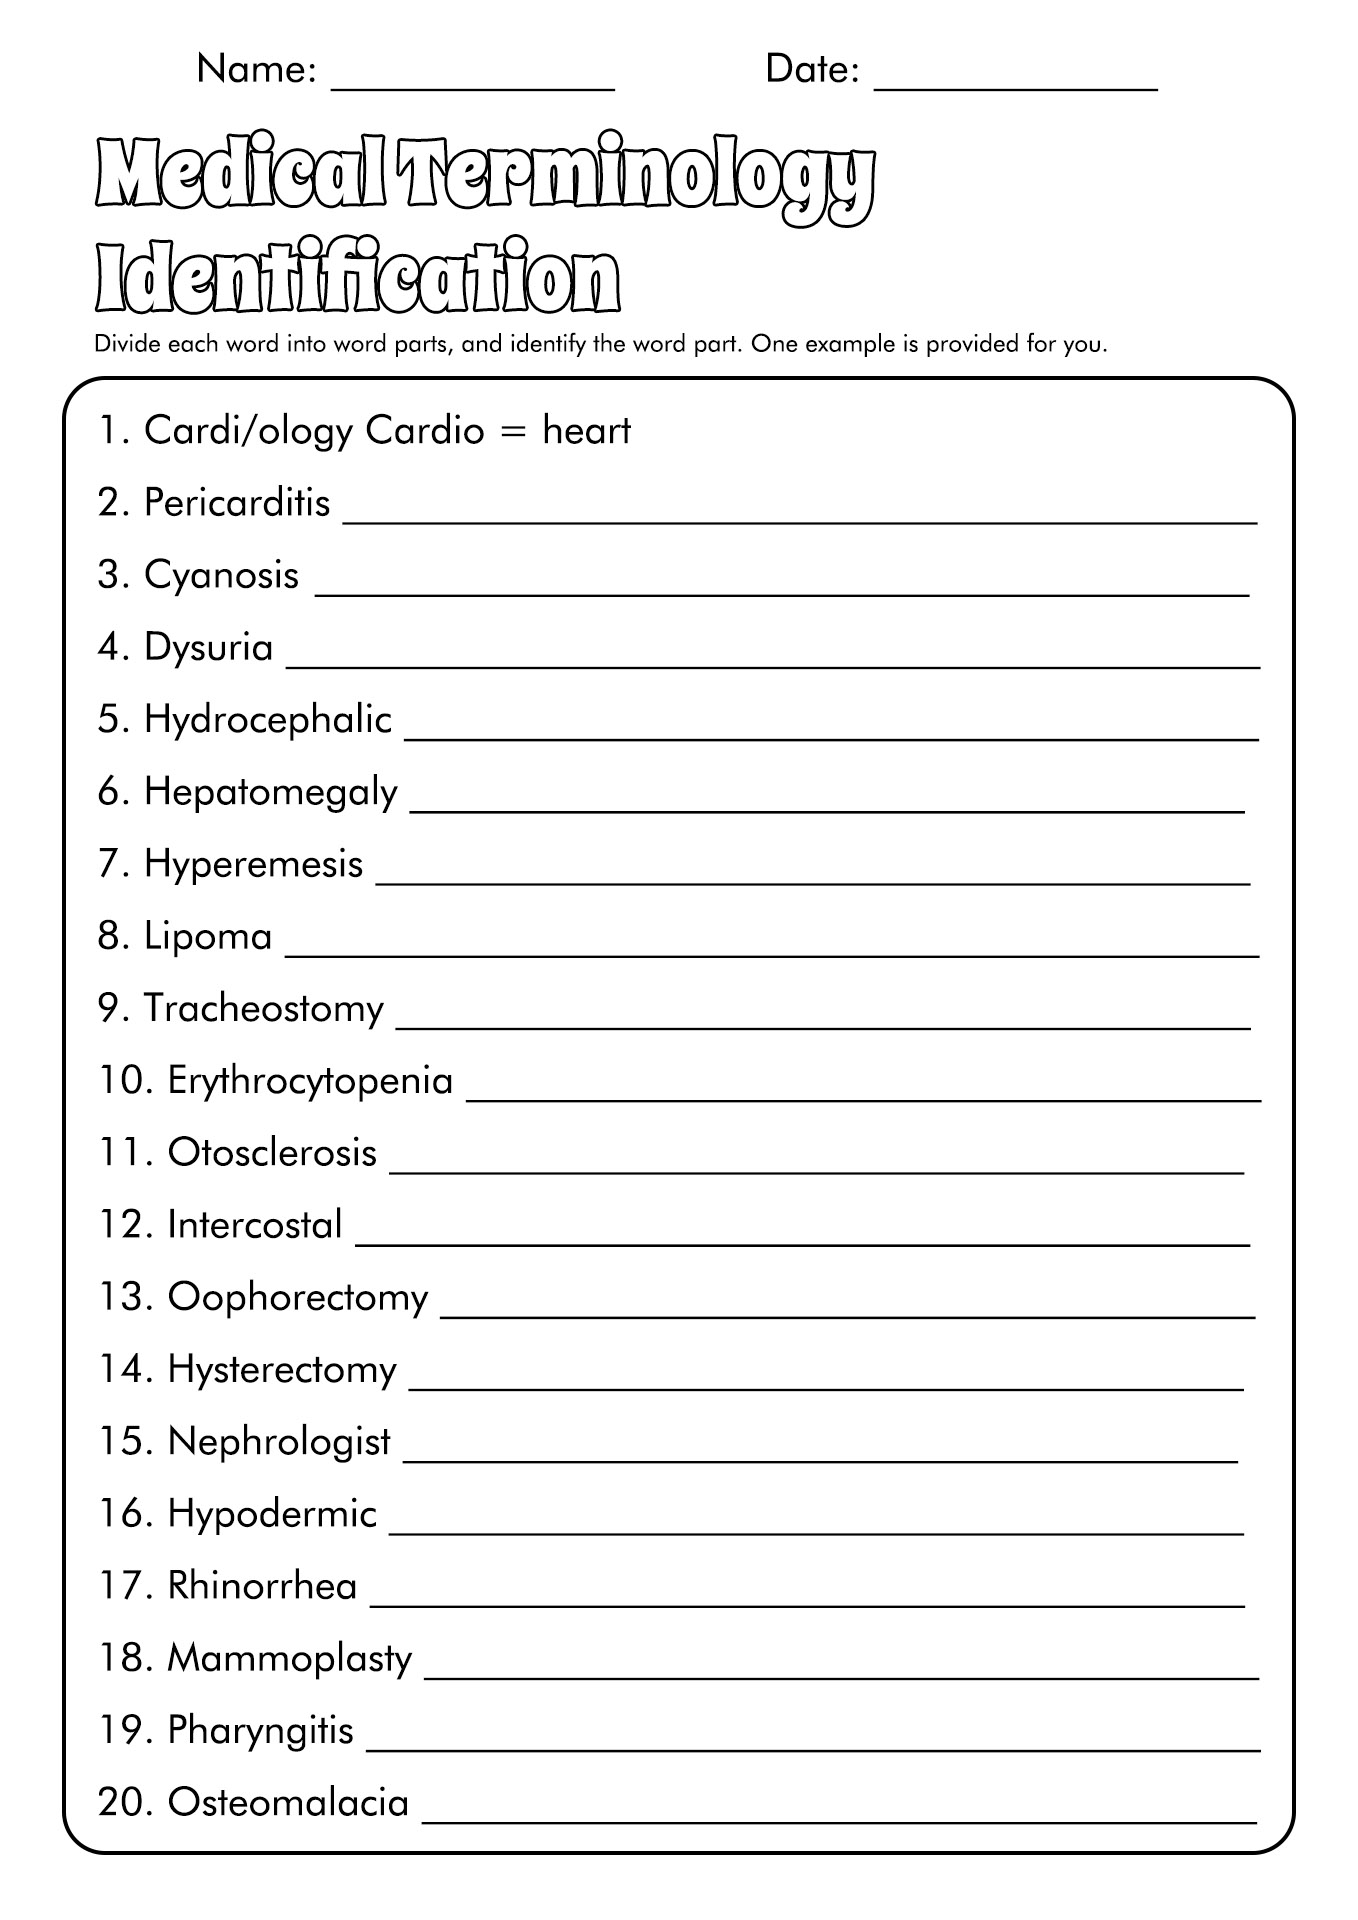 Free Printable Medical Terminology Worksheets Image